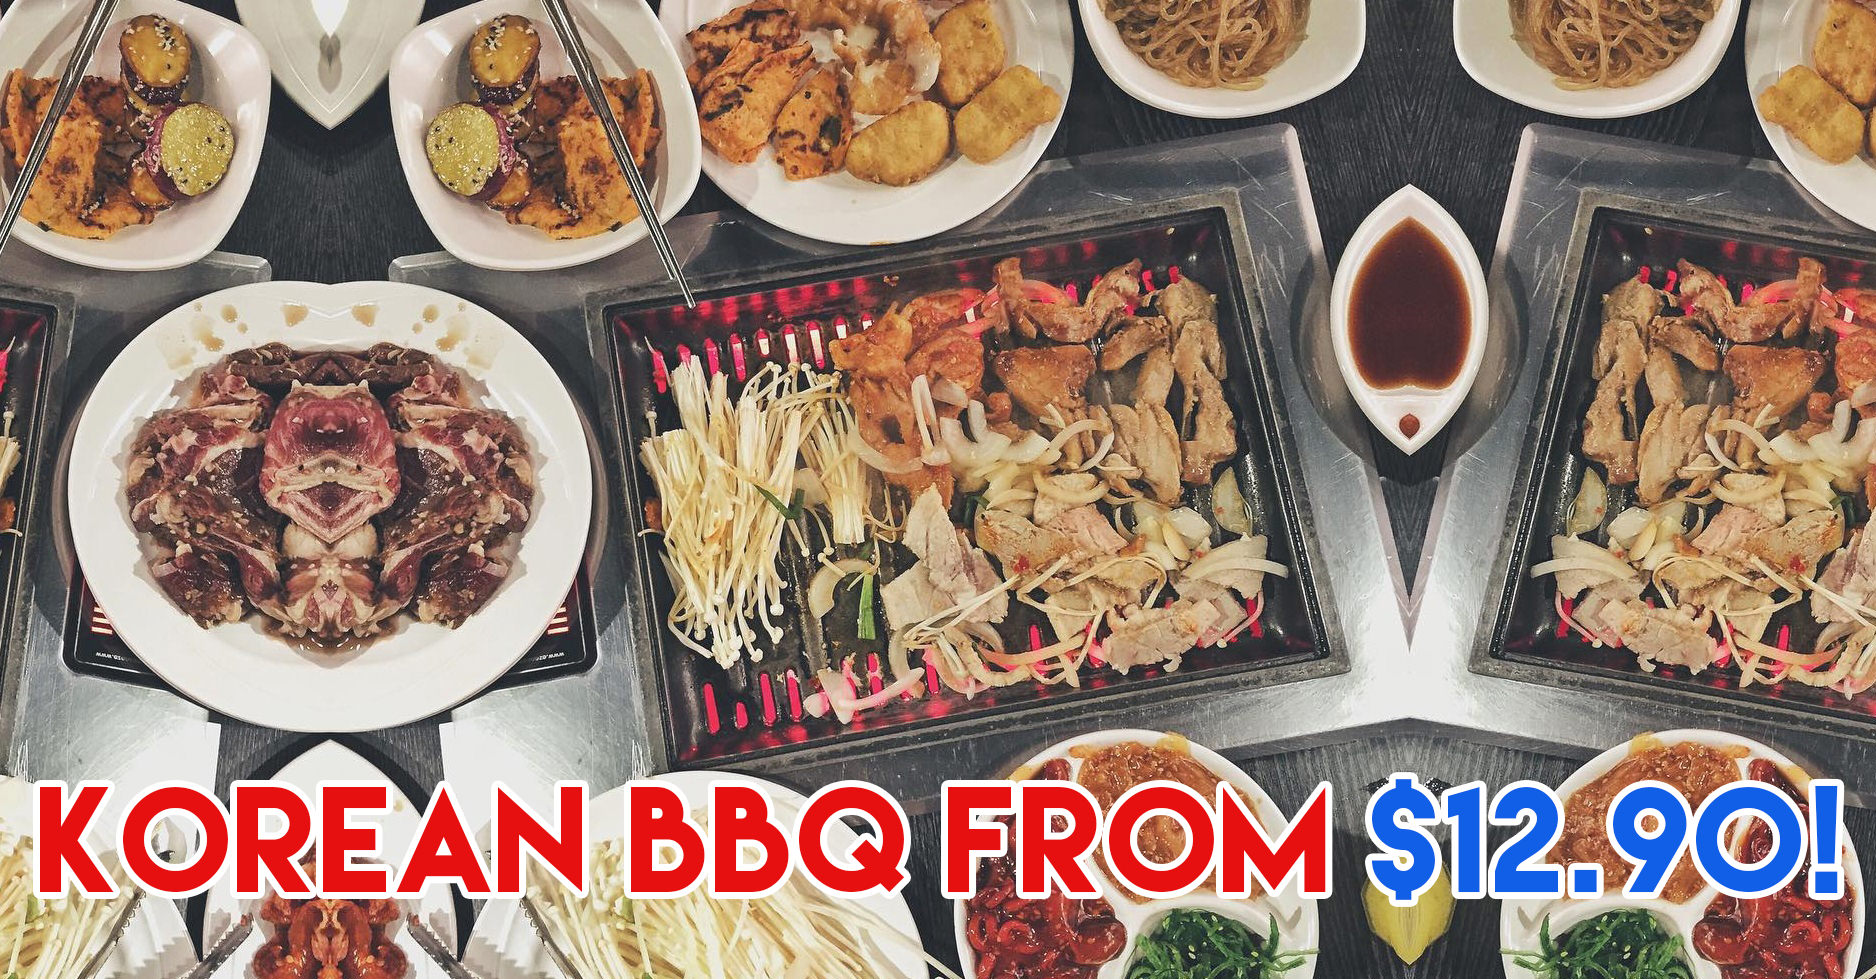 Cheap Korean Food In Singapore - Affordable Buffet